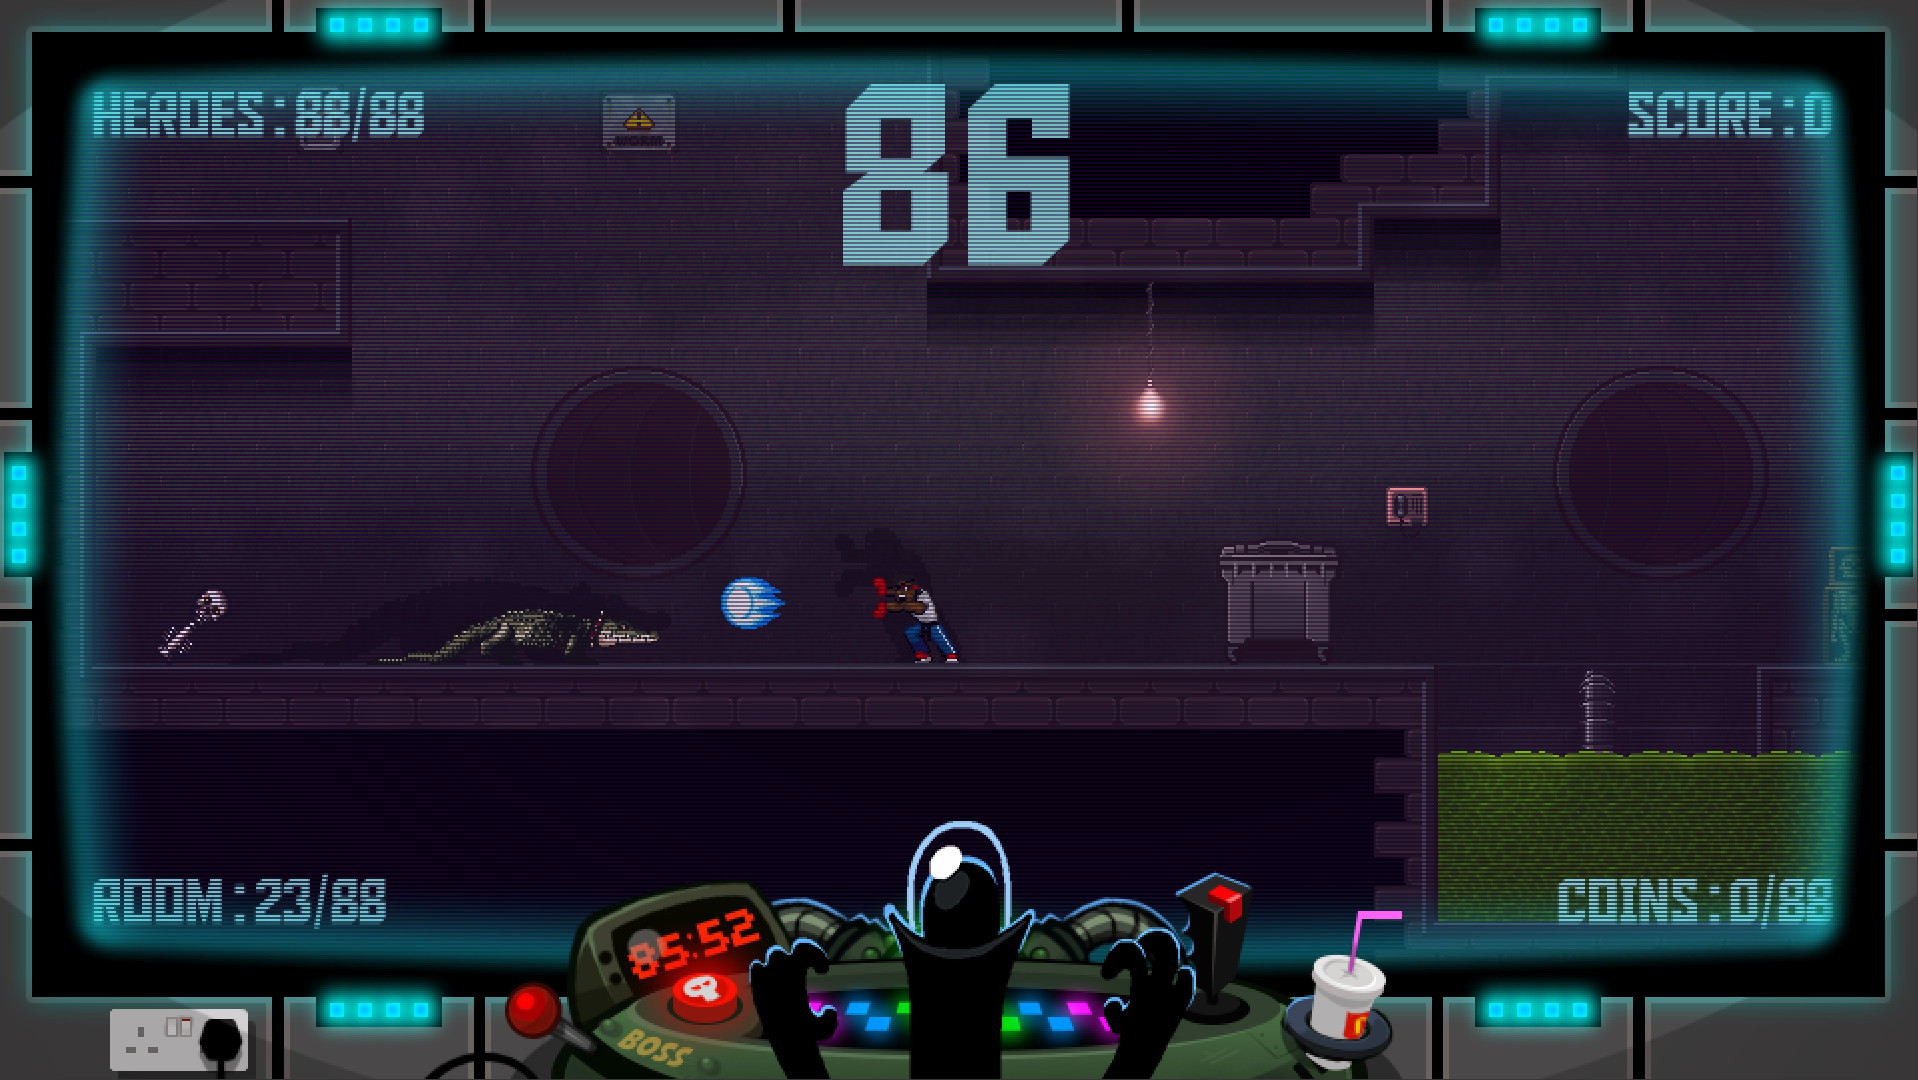 88 Heroes - screenshot 1